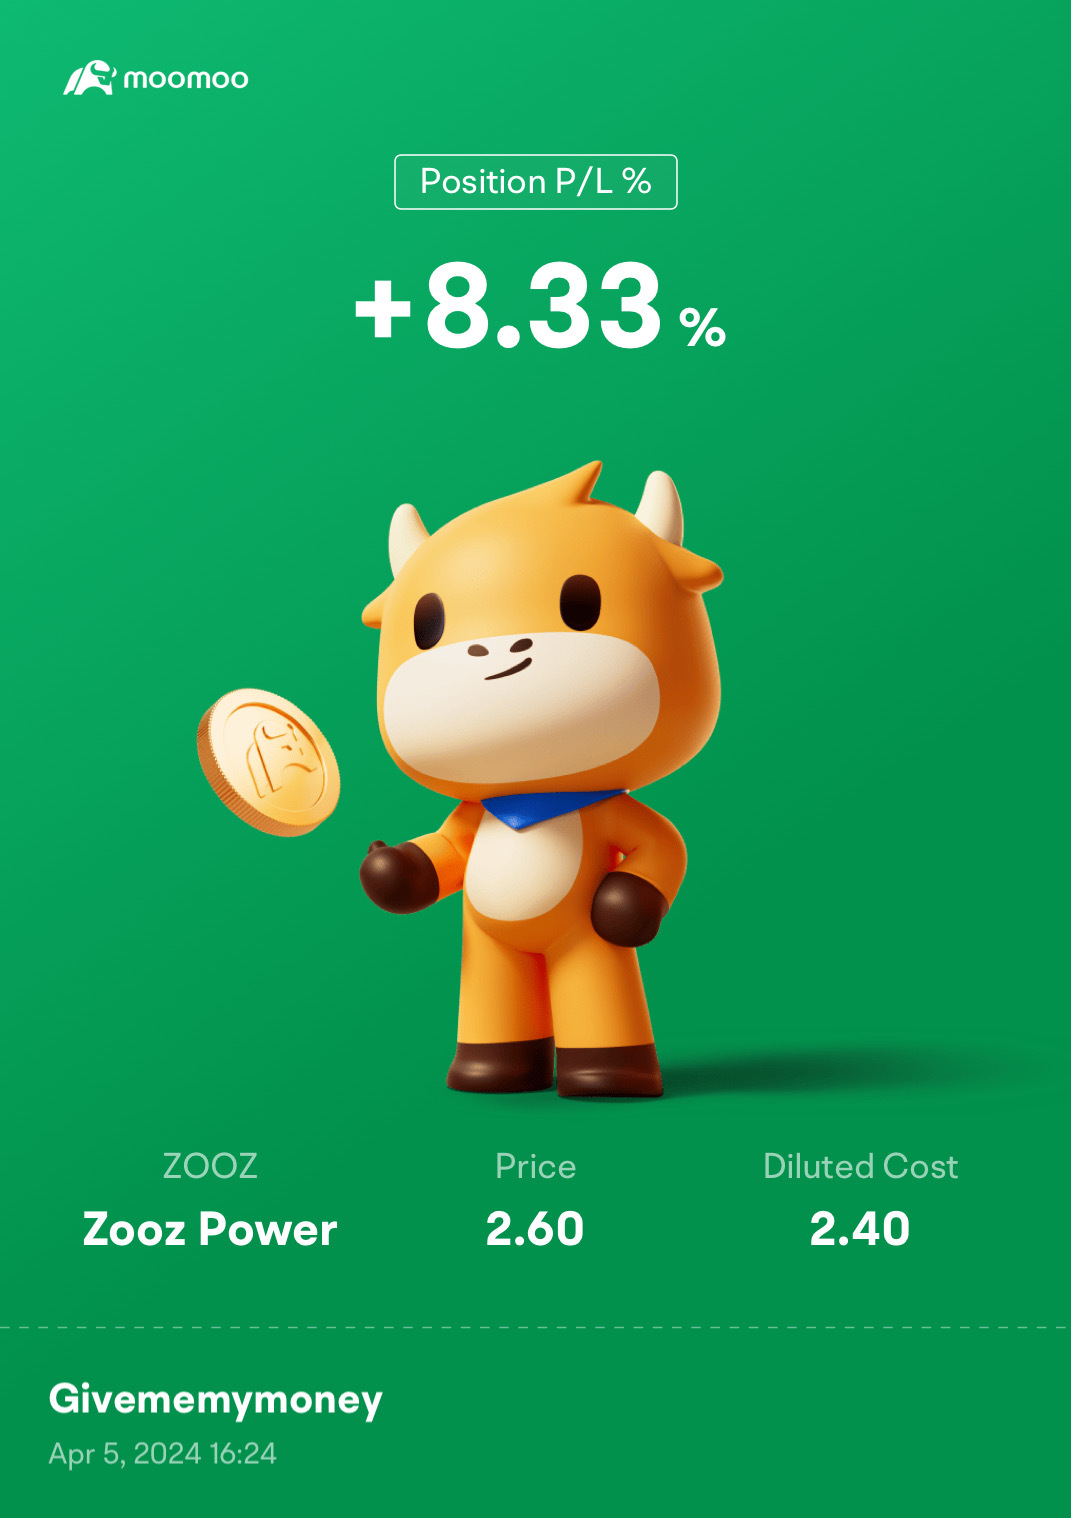 $Zooz Power (ZOOZ.US)$ just bought